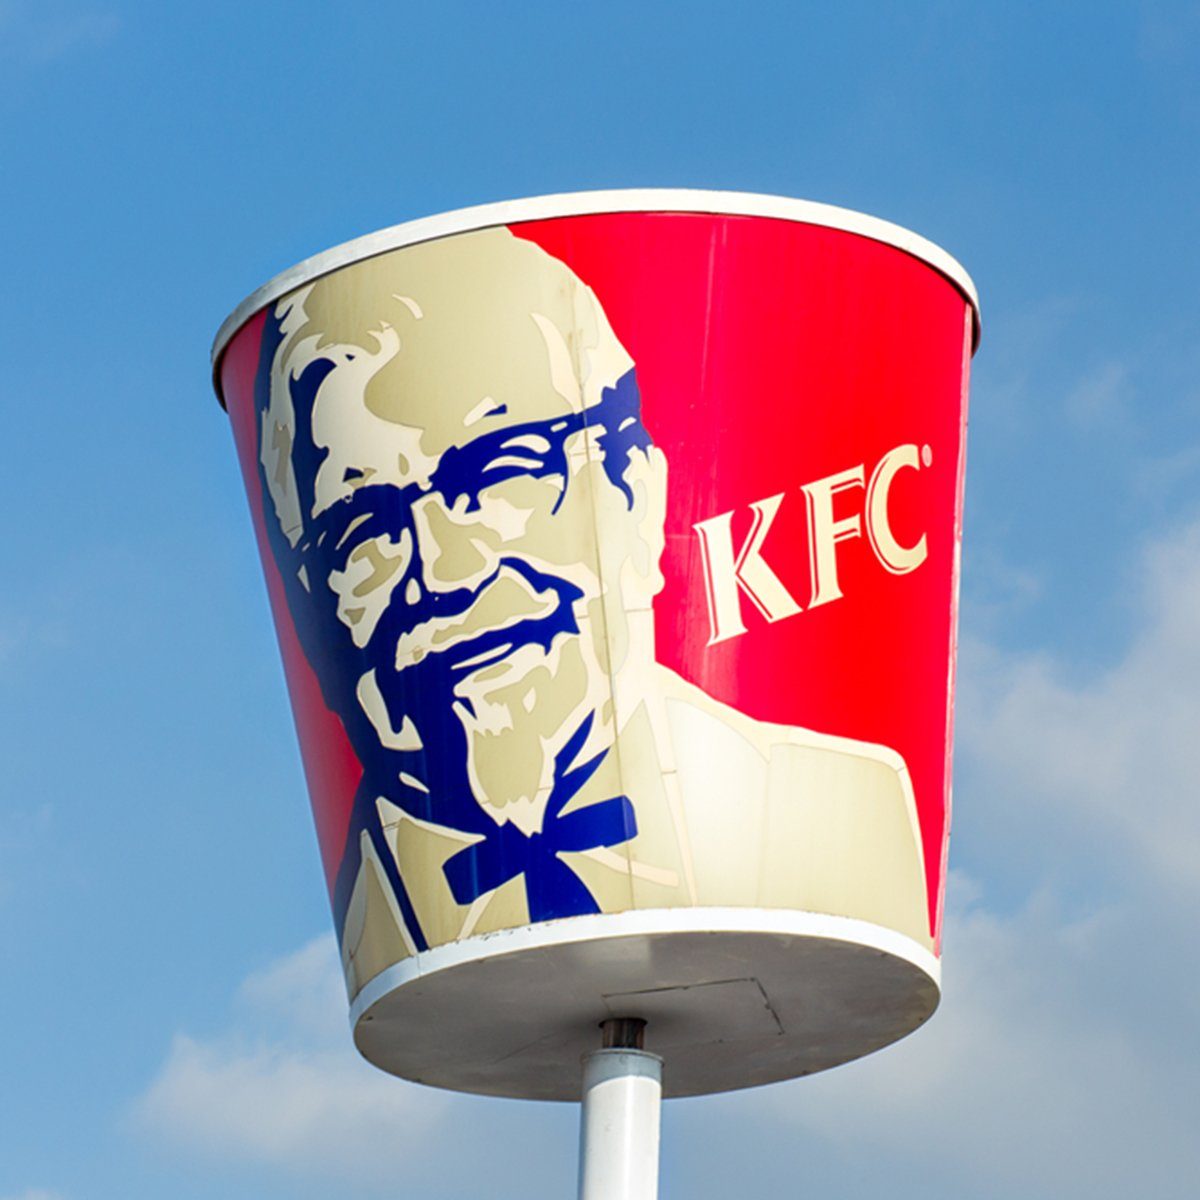 Traditional KFC restaurant sign.